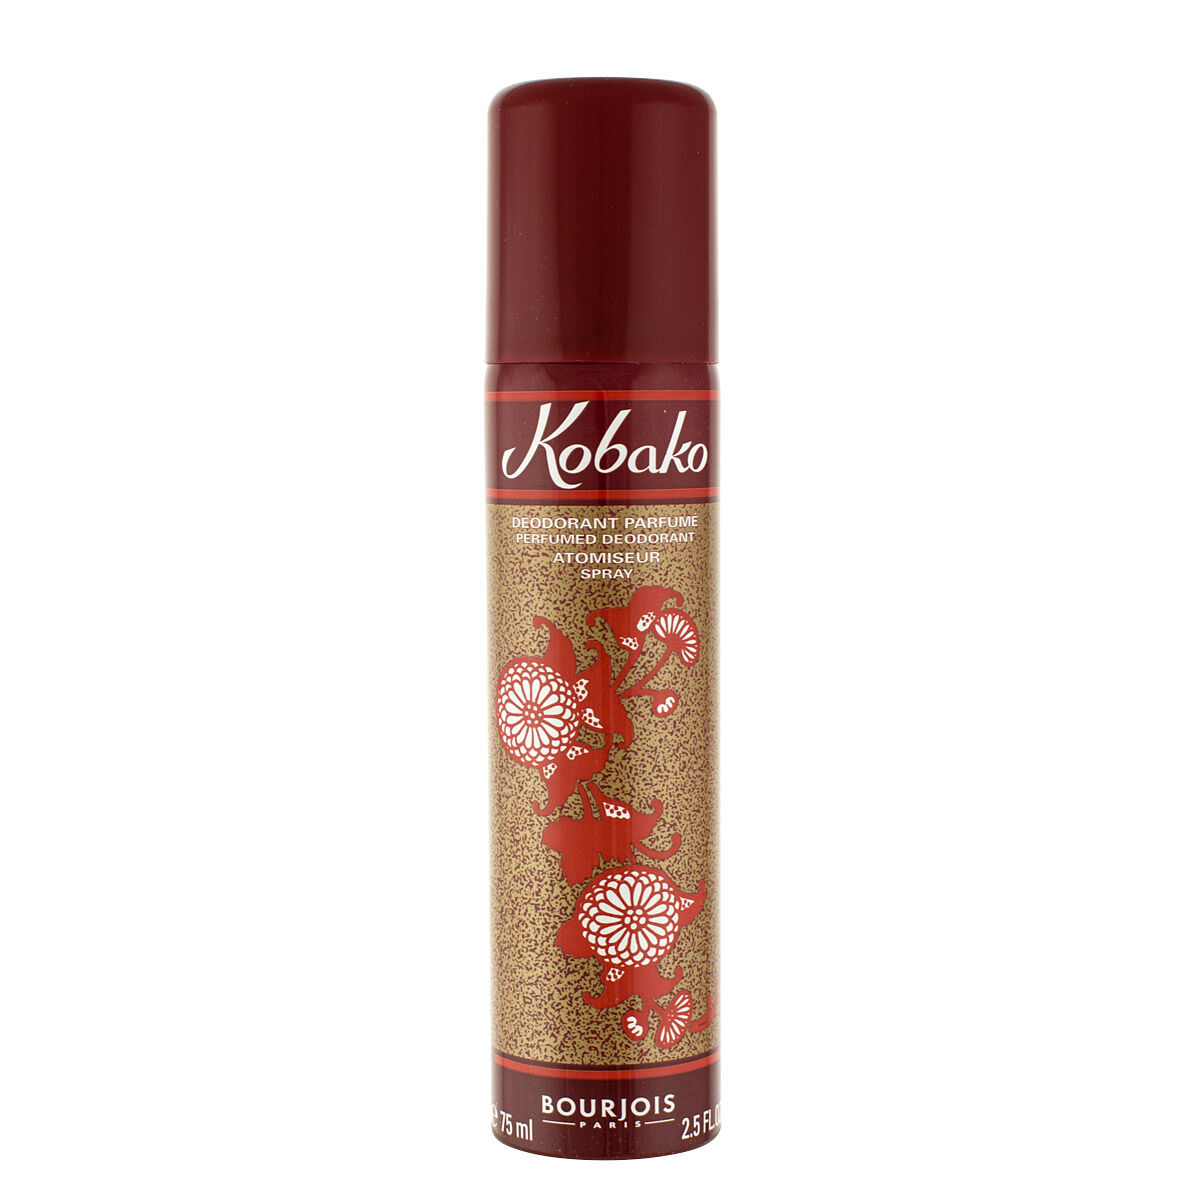 Spray déodorant Bourjois 75 ml Kobako